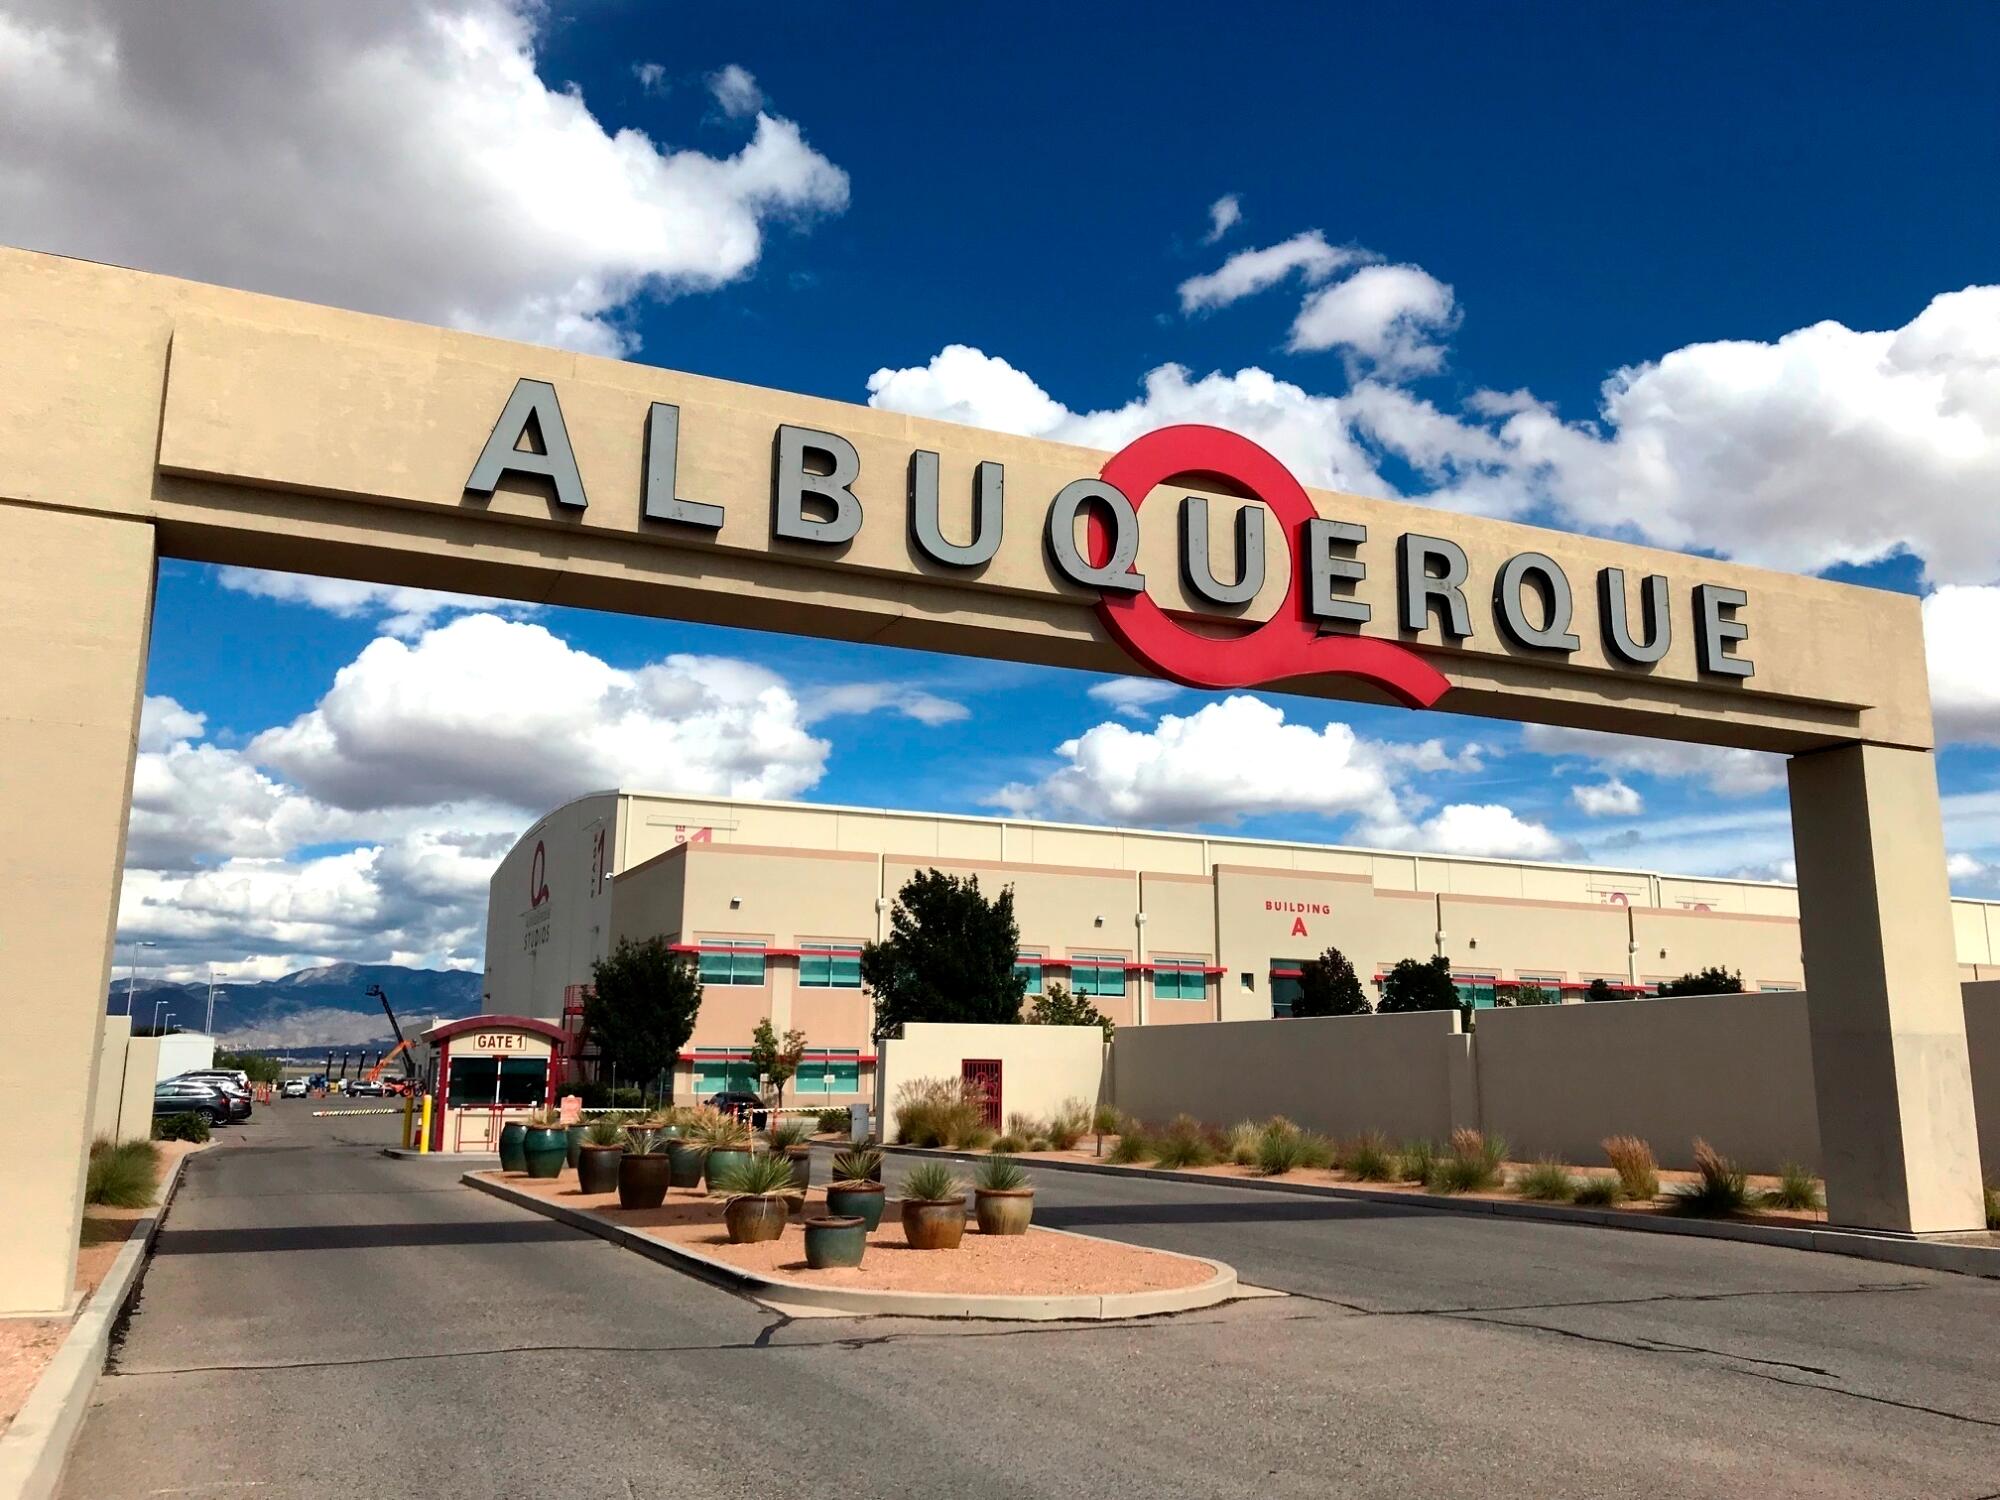 Arched entrance to a building complex reads "Albuquerque"